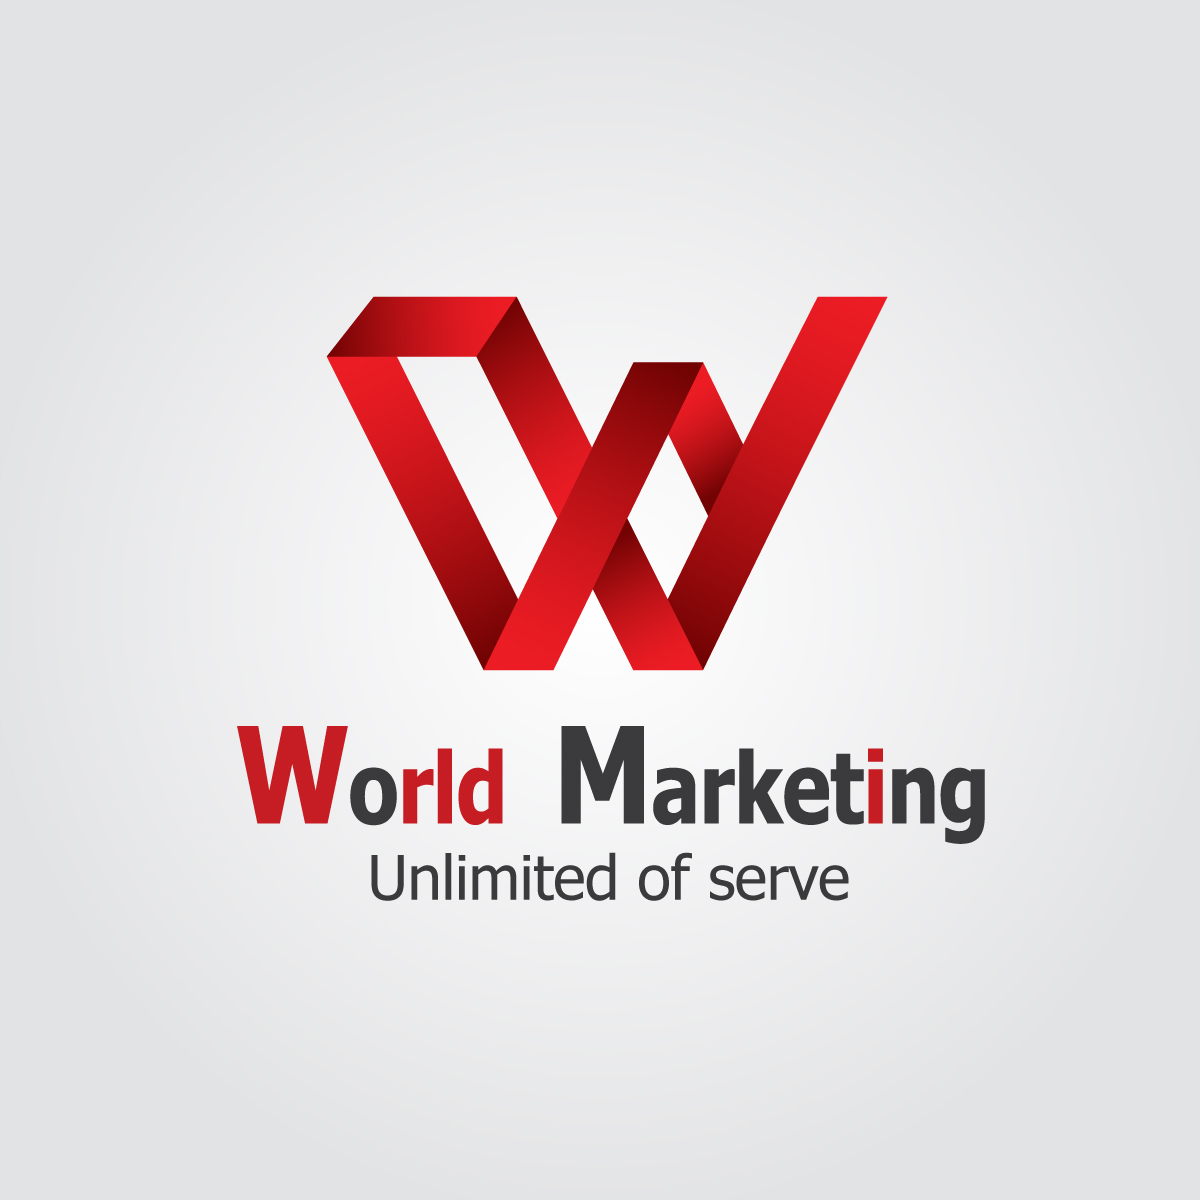 World Marketing  logo โลโก้